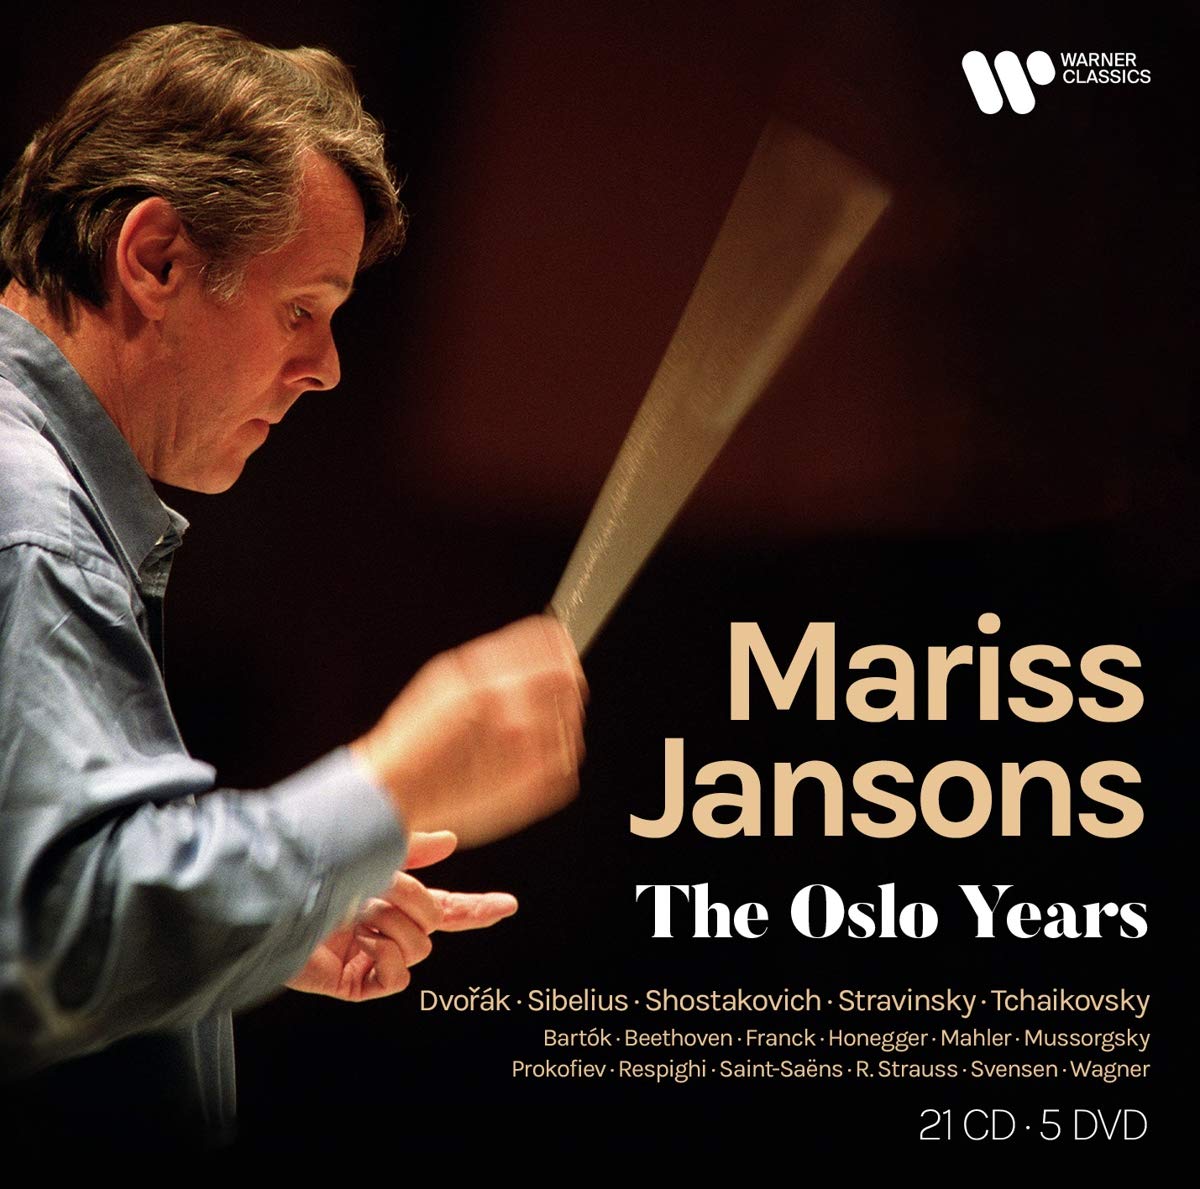 Mariss Jansons - The Oslo Years (Oslo Philharmonic Orchestra), 21 CD + 5 DVD, BOX SET